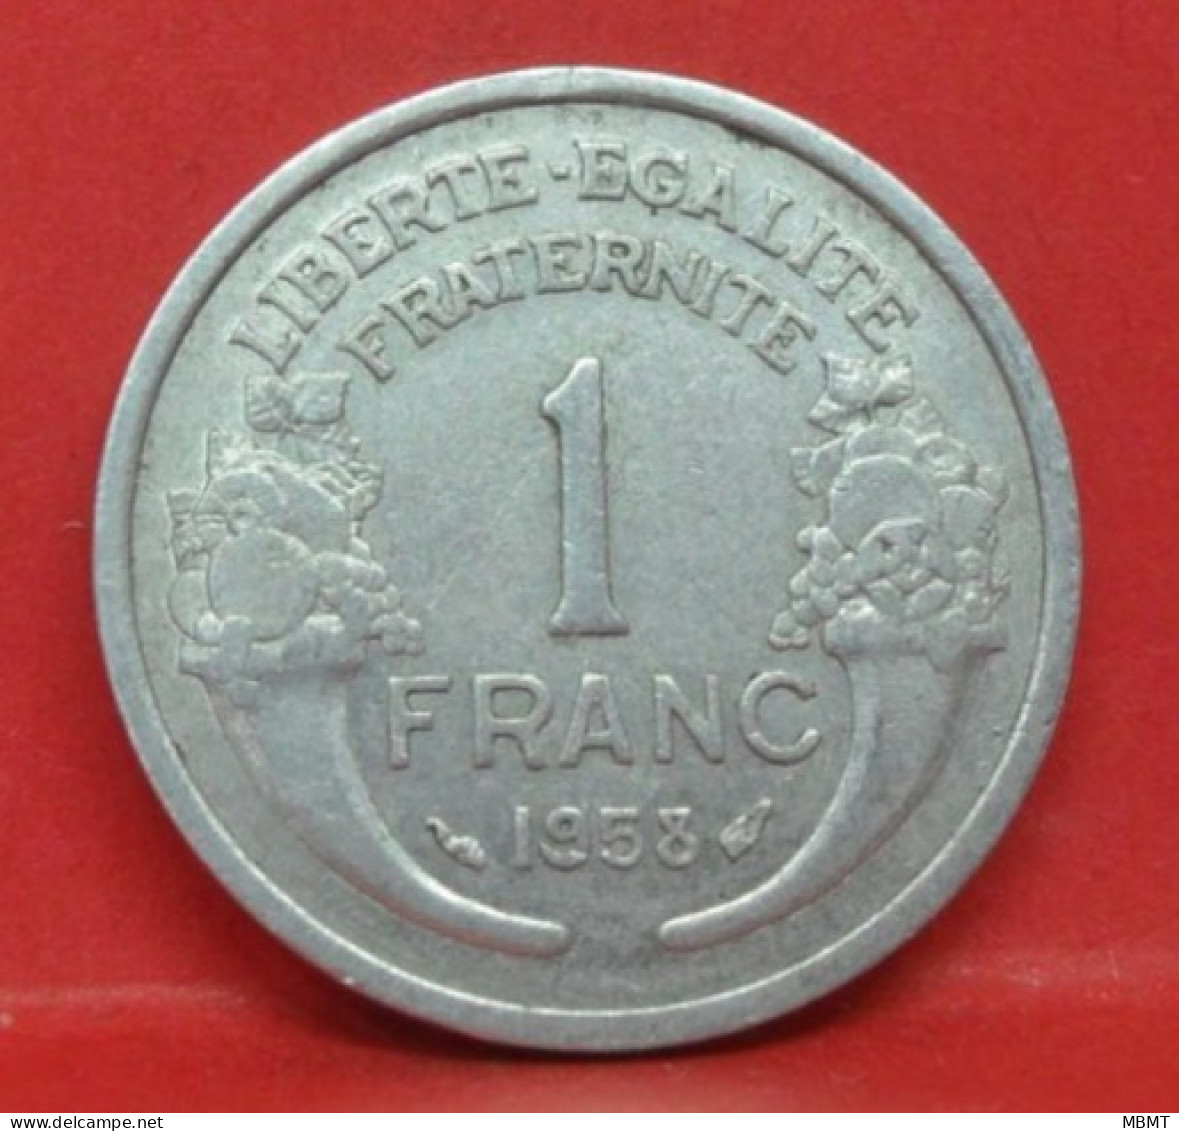 1 Franc Morlon Alu 1958 - TTB - Pièce Monnaie France - Article N°687 - 1 Franc